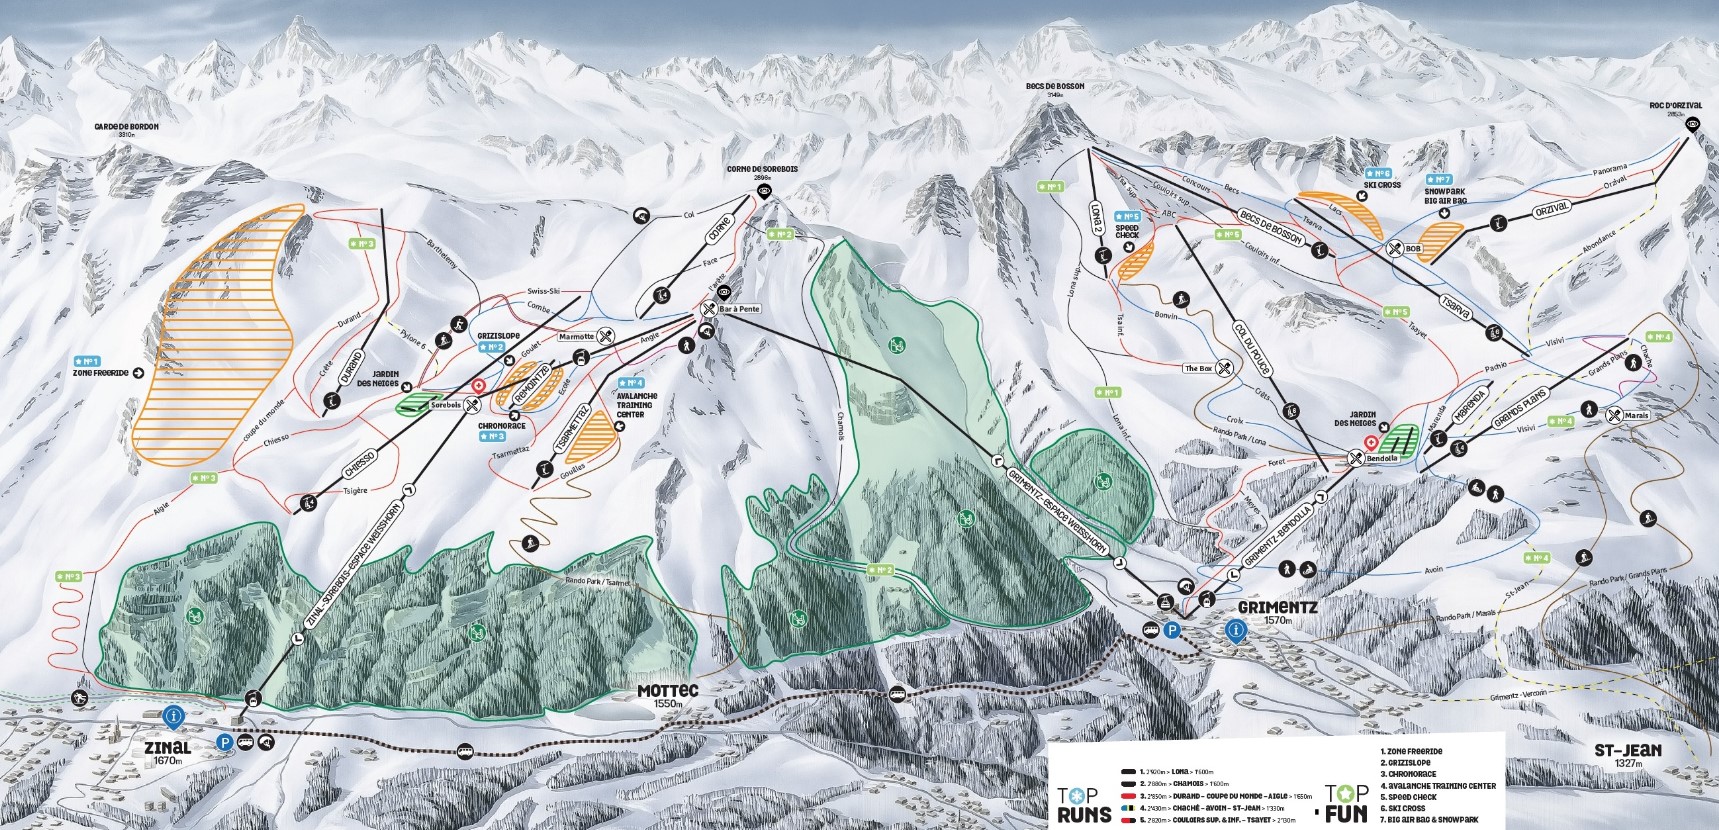 Grimentz Zinal Ski Trail Map